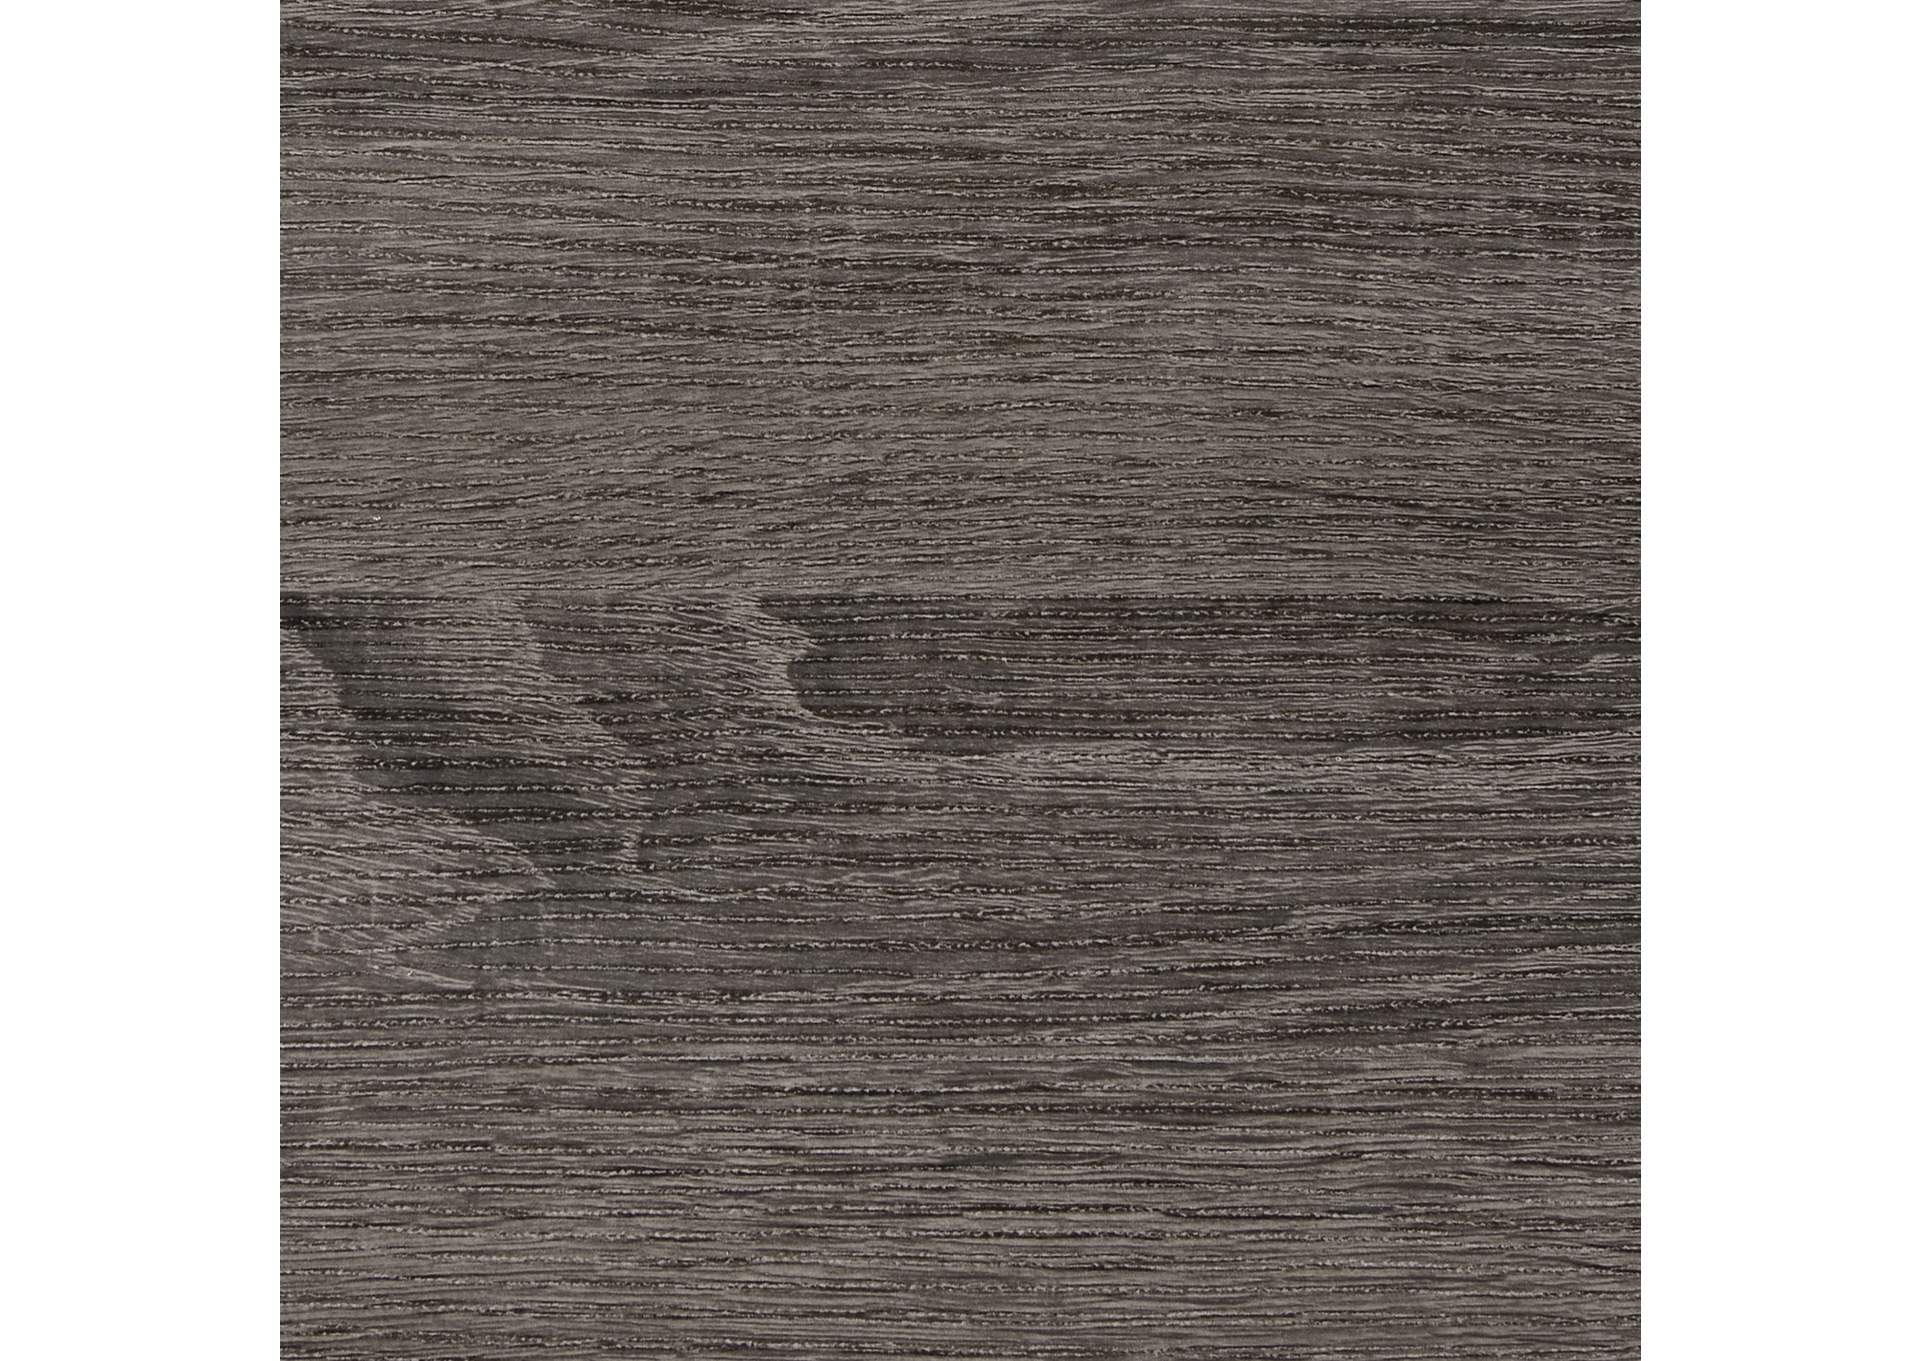 Watson California King Panel Bed Grey Oak and Black,Coaster Furniture